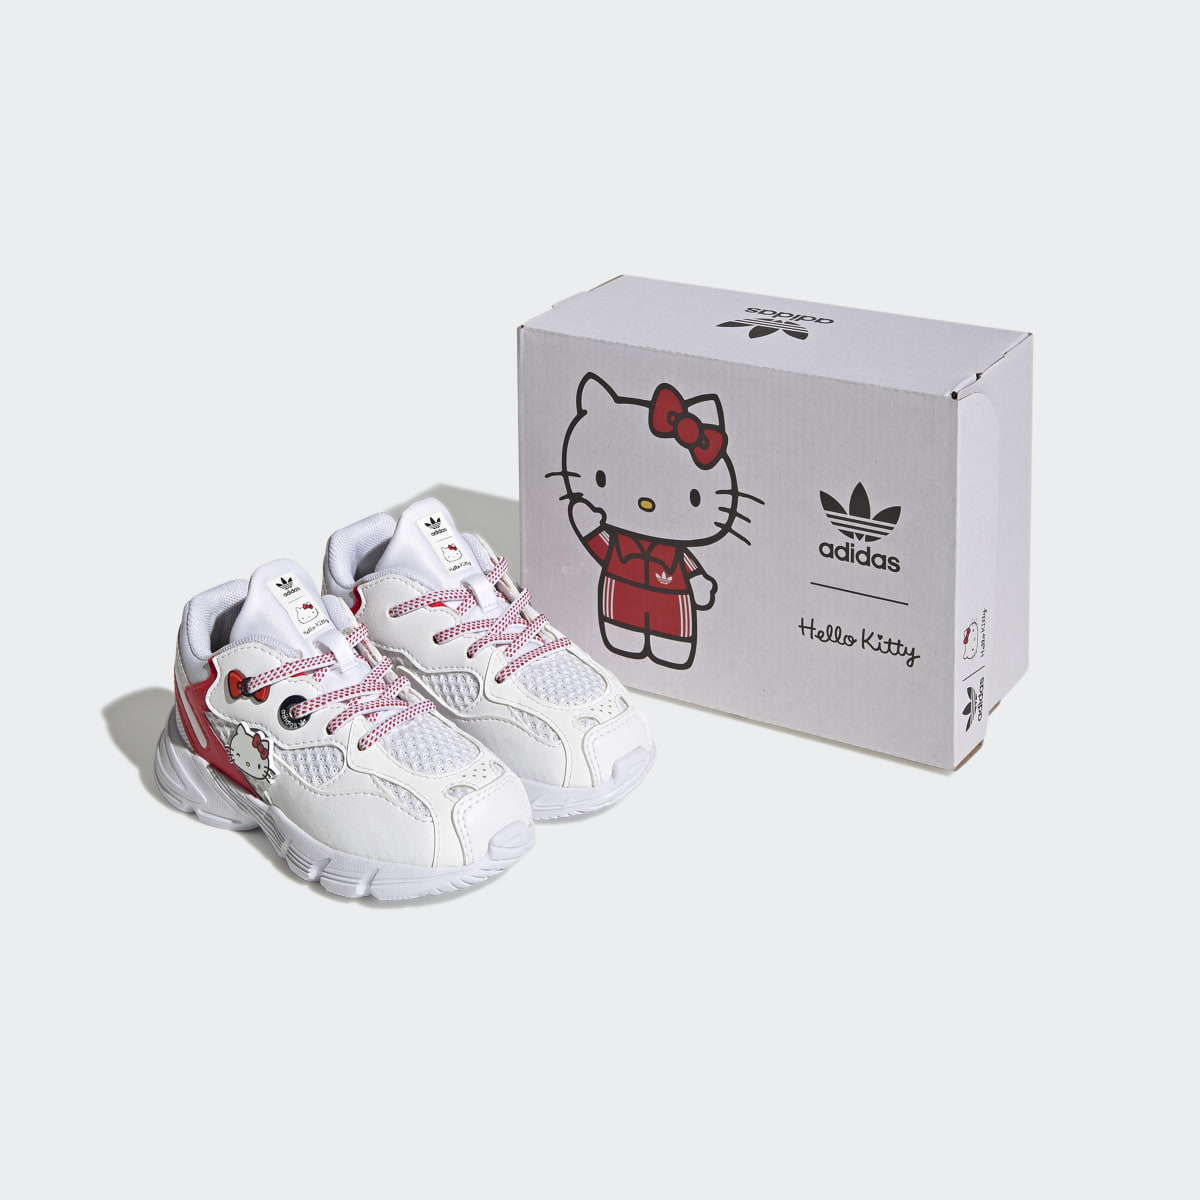 Adidas Hello Kitty Astir Shoes. 4